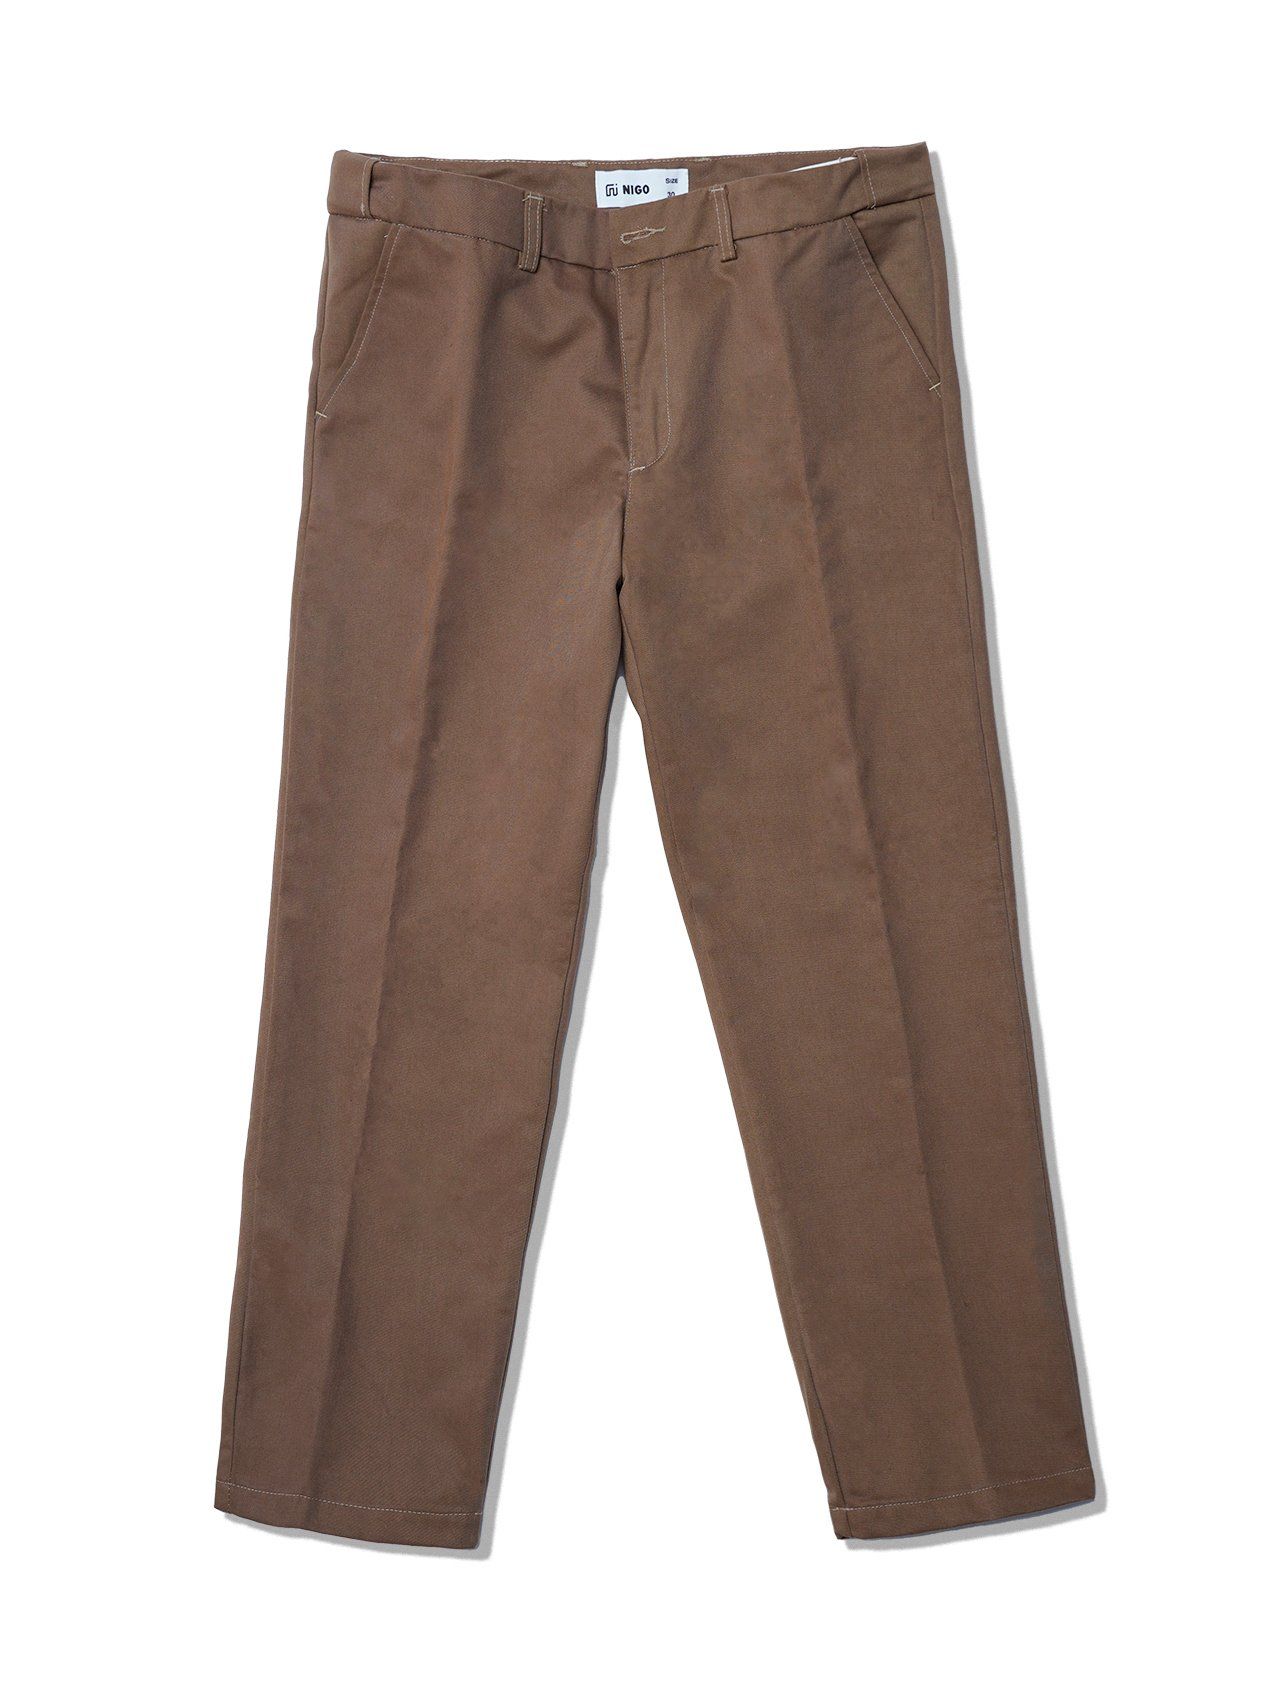  quần kaki brown straight fit 02 